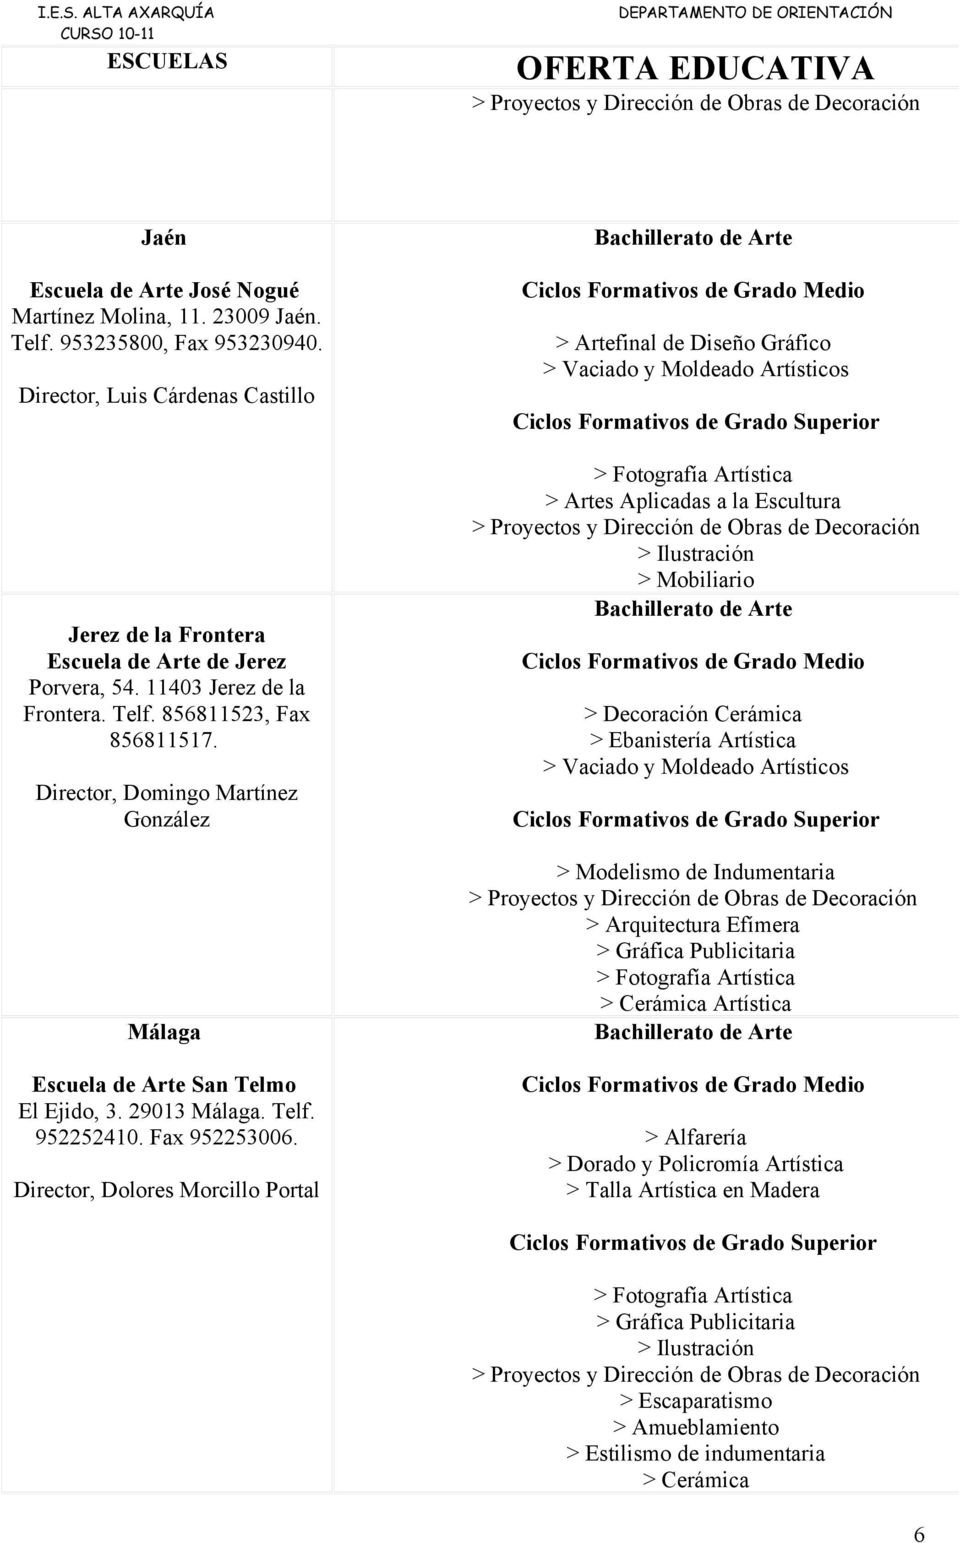 Director, Domingo Martínez González Málaga Escuela de Arte San Telmo El Ejido, 3. 29013 Málaga. Telf. 952252410. Fax 952253006.